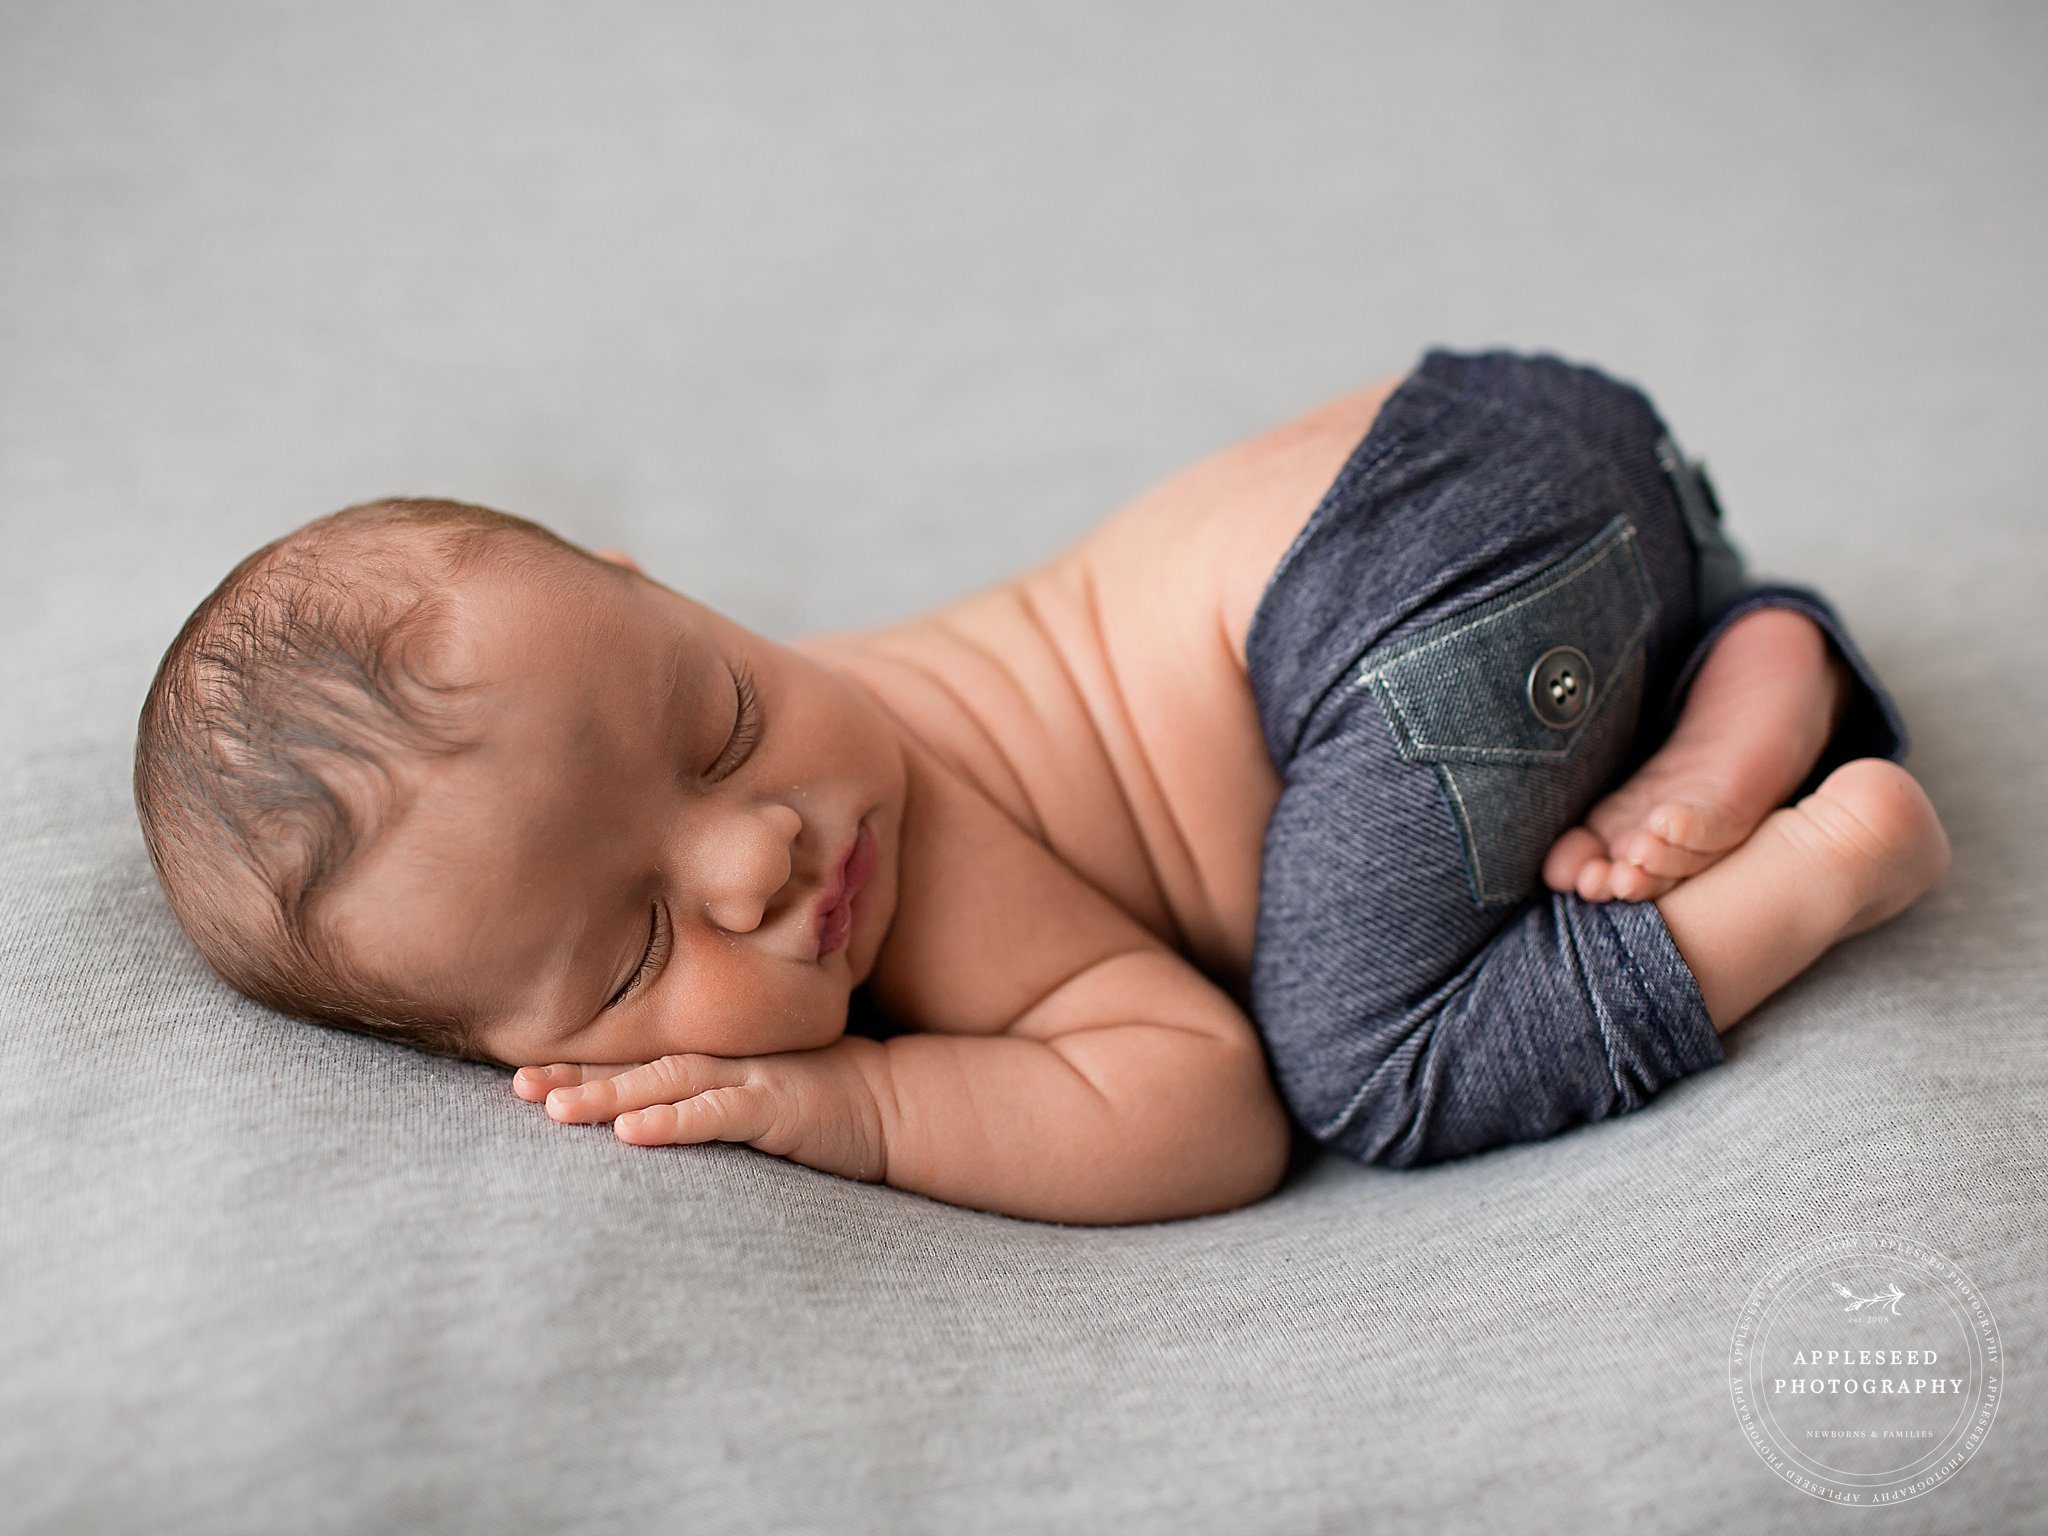 Newborn Photographer Atlanta | Ben | Appleseed Photography